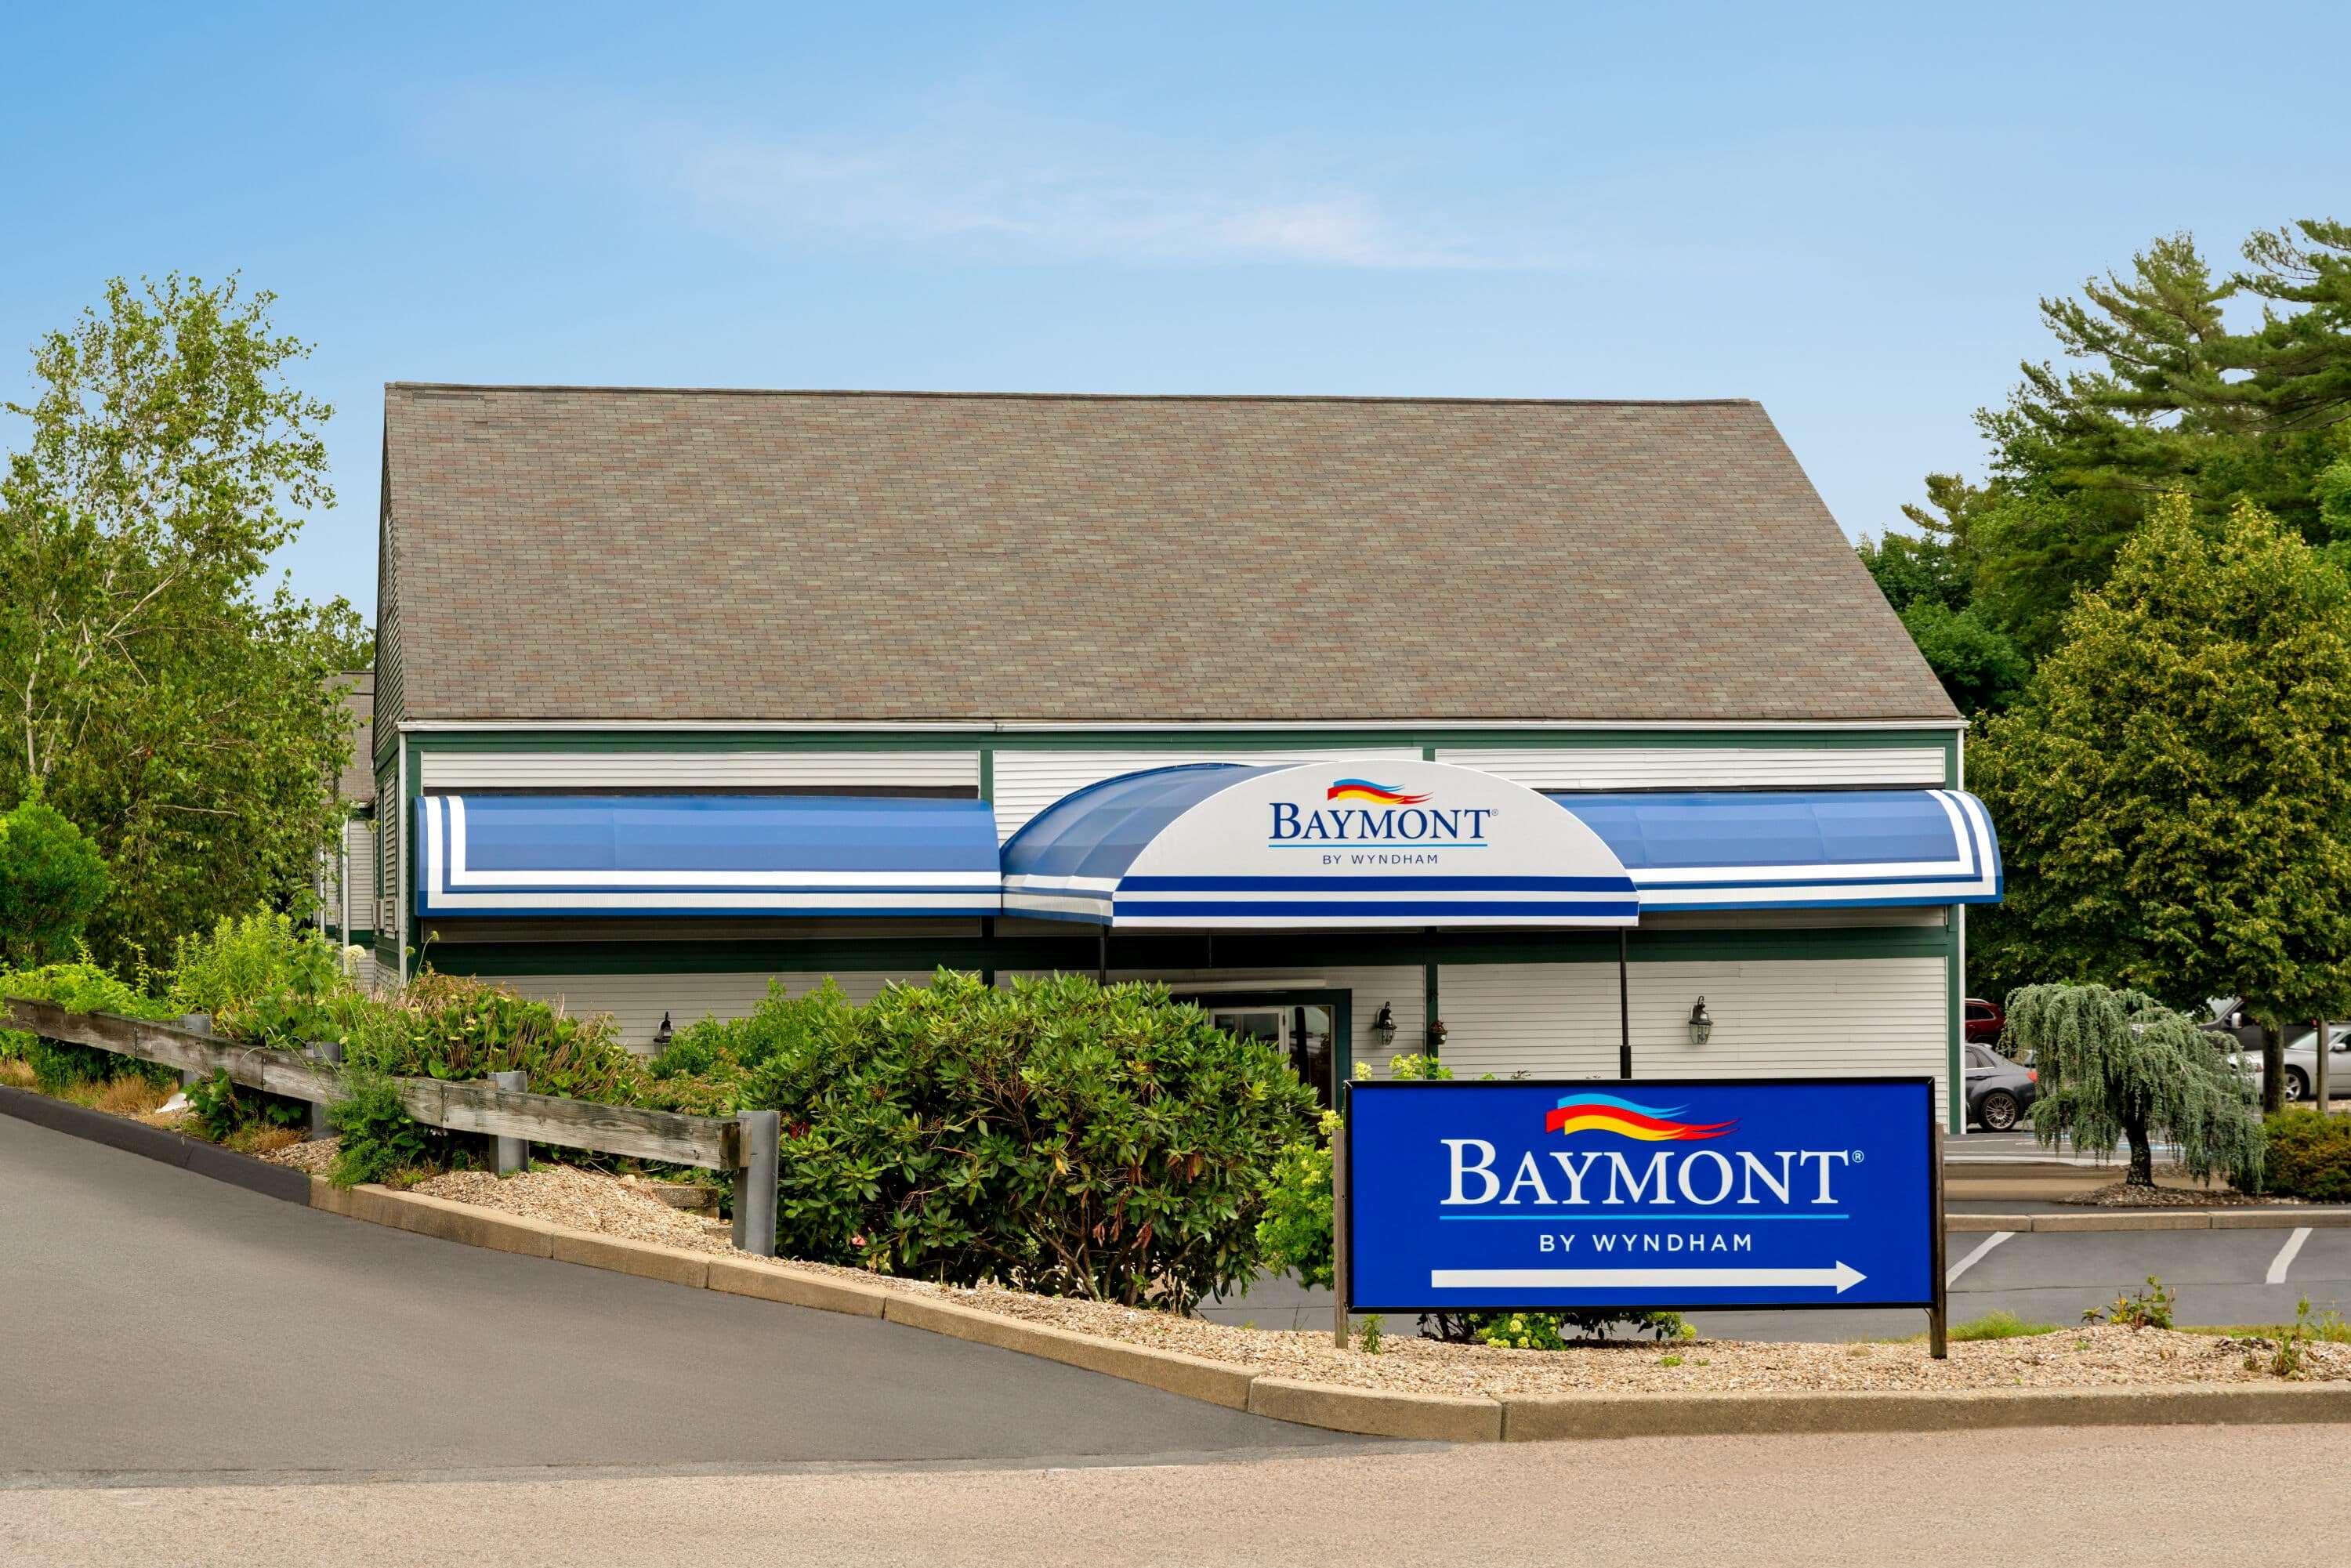 Baymont by Wyndham-North Dartmouth image